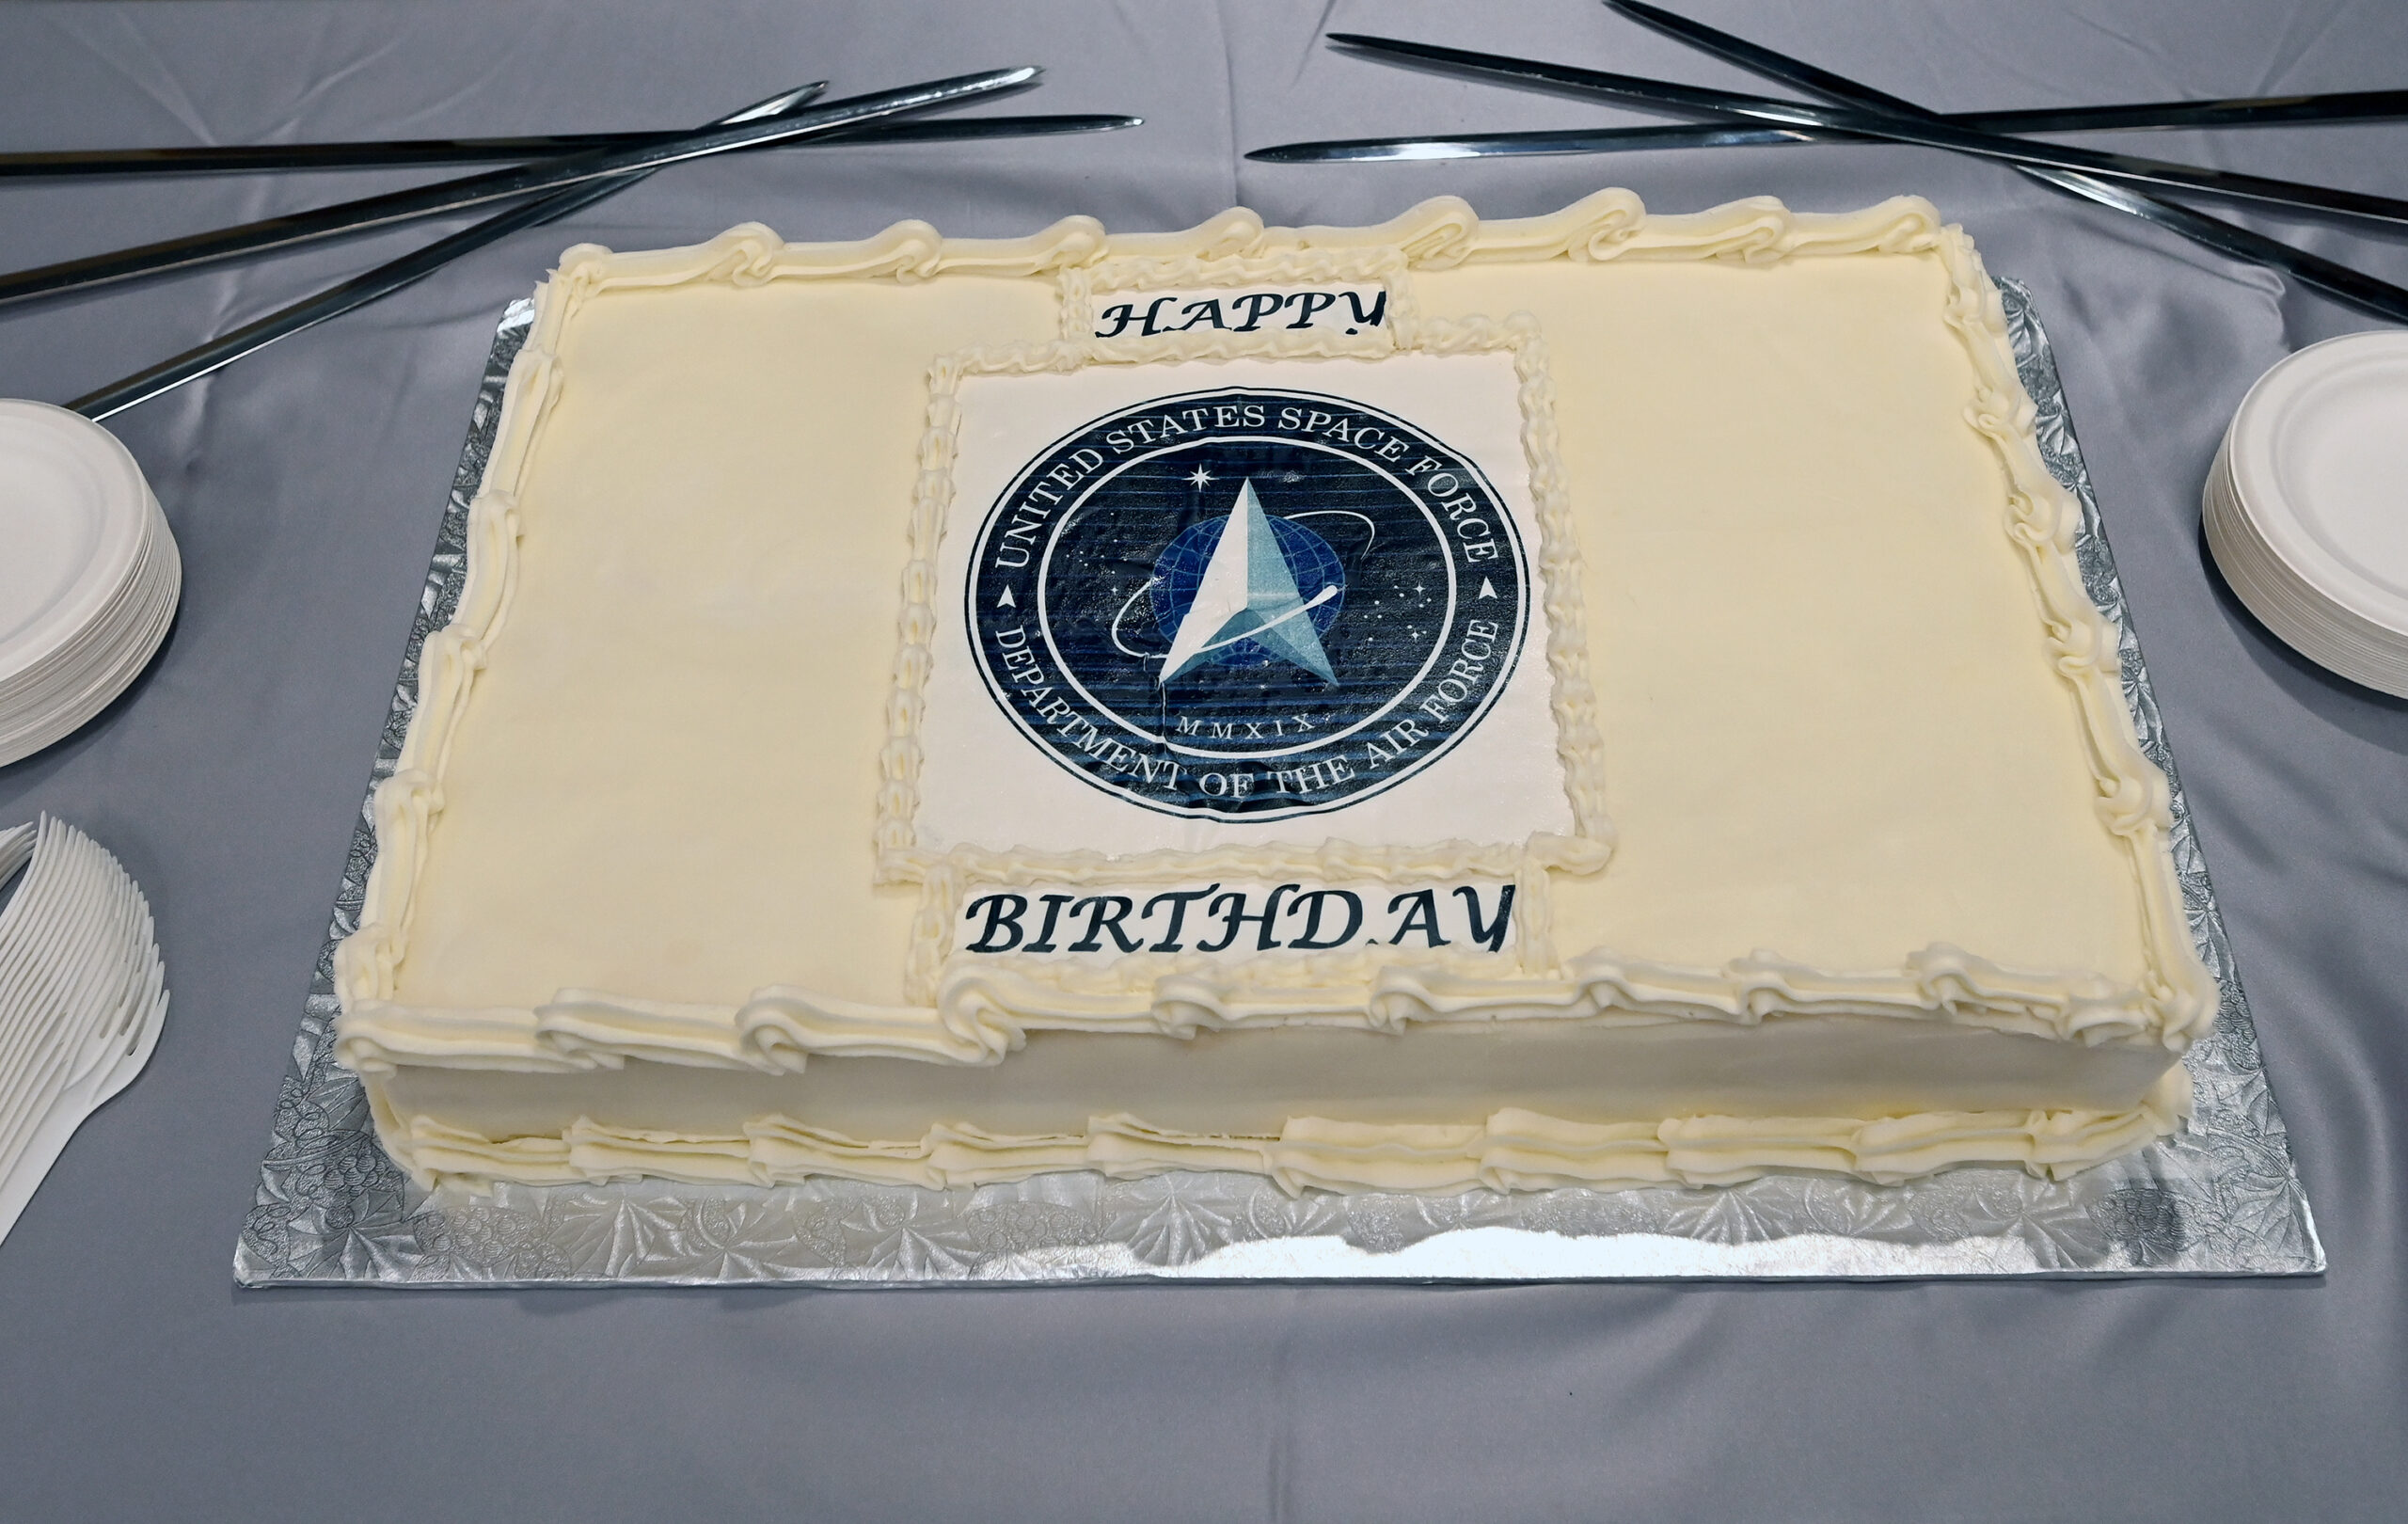 Astronaut Cake | Space Theme Cake | Astronaut Birthday Cake For Kids –  Liliyum Patisserie & Cafe